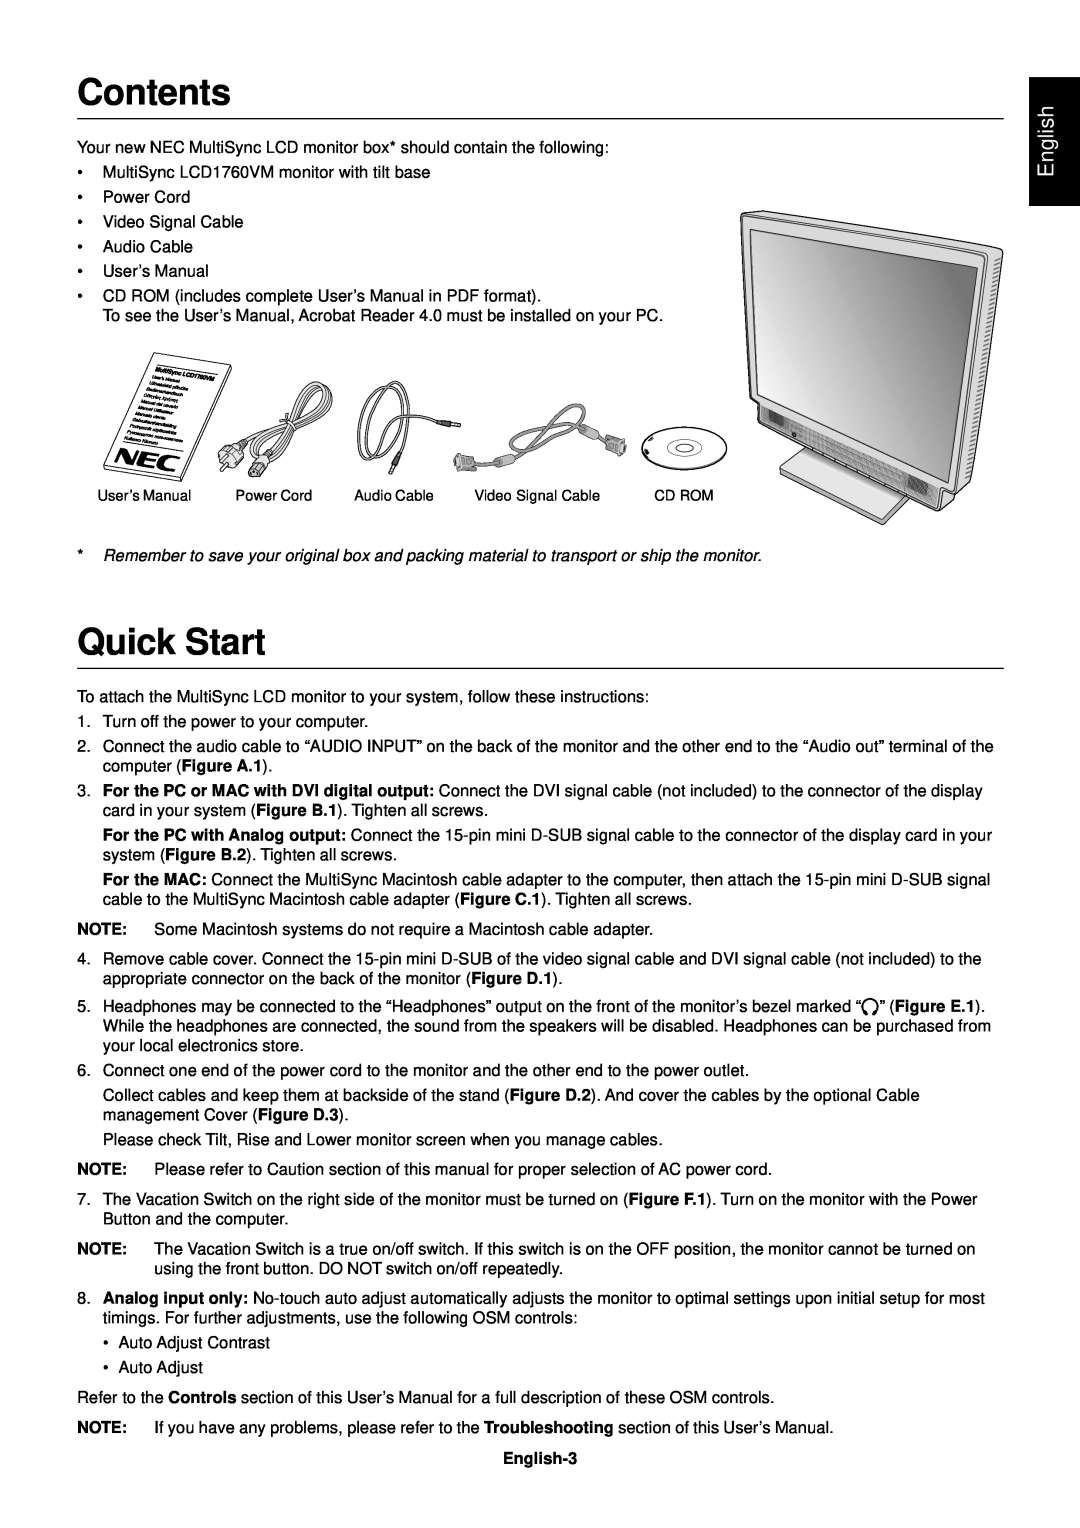 Mitsubishi Electronics LCD1760VM user manual Contents, Quick Start, English-3 